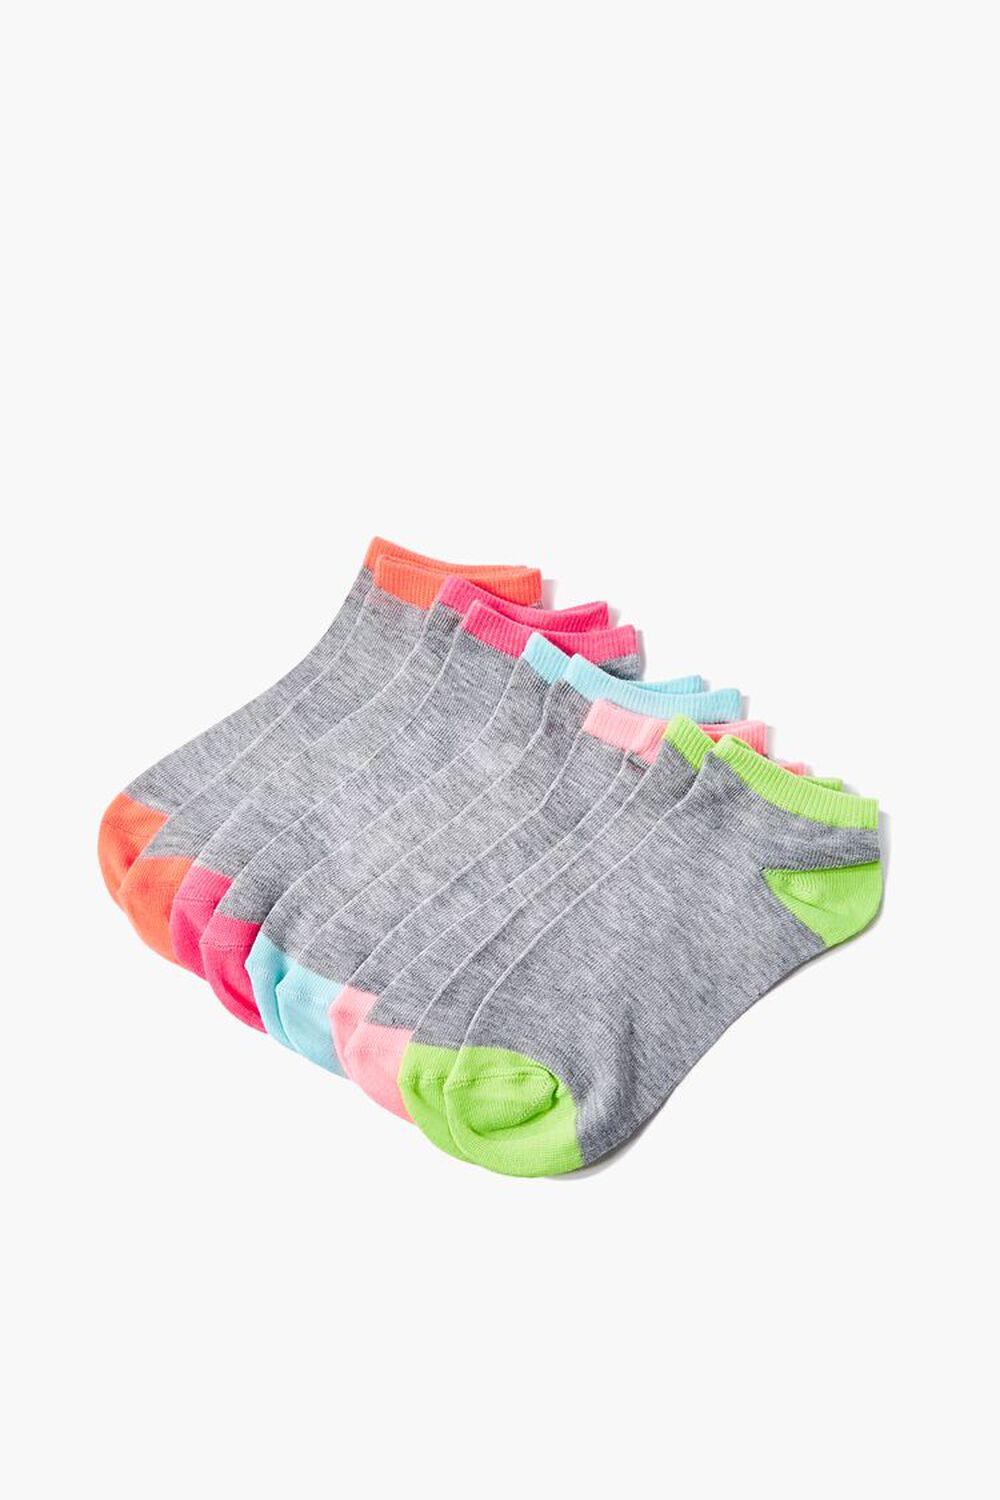 HEATHER GREY/MULTI Colorblock Ankle Socks - 5 Pack, image 1